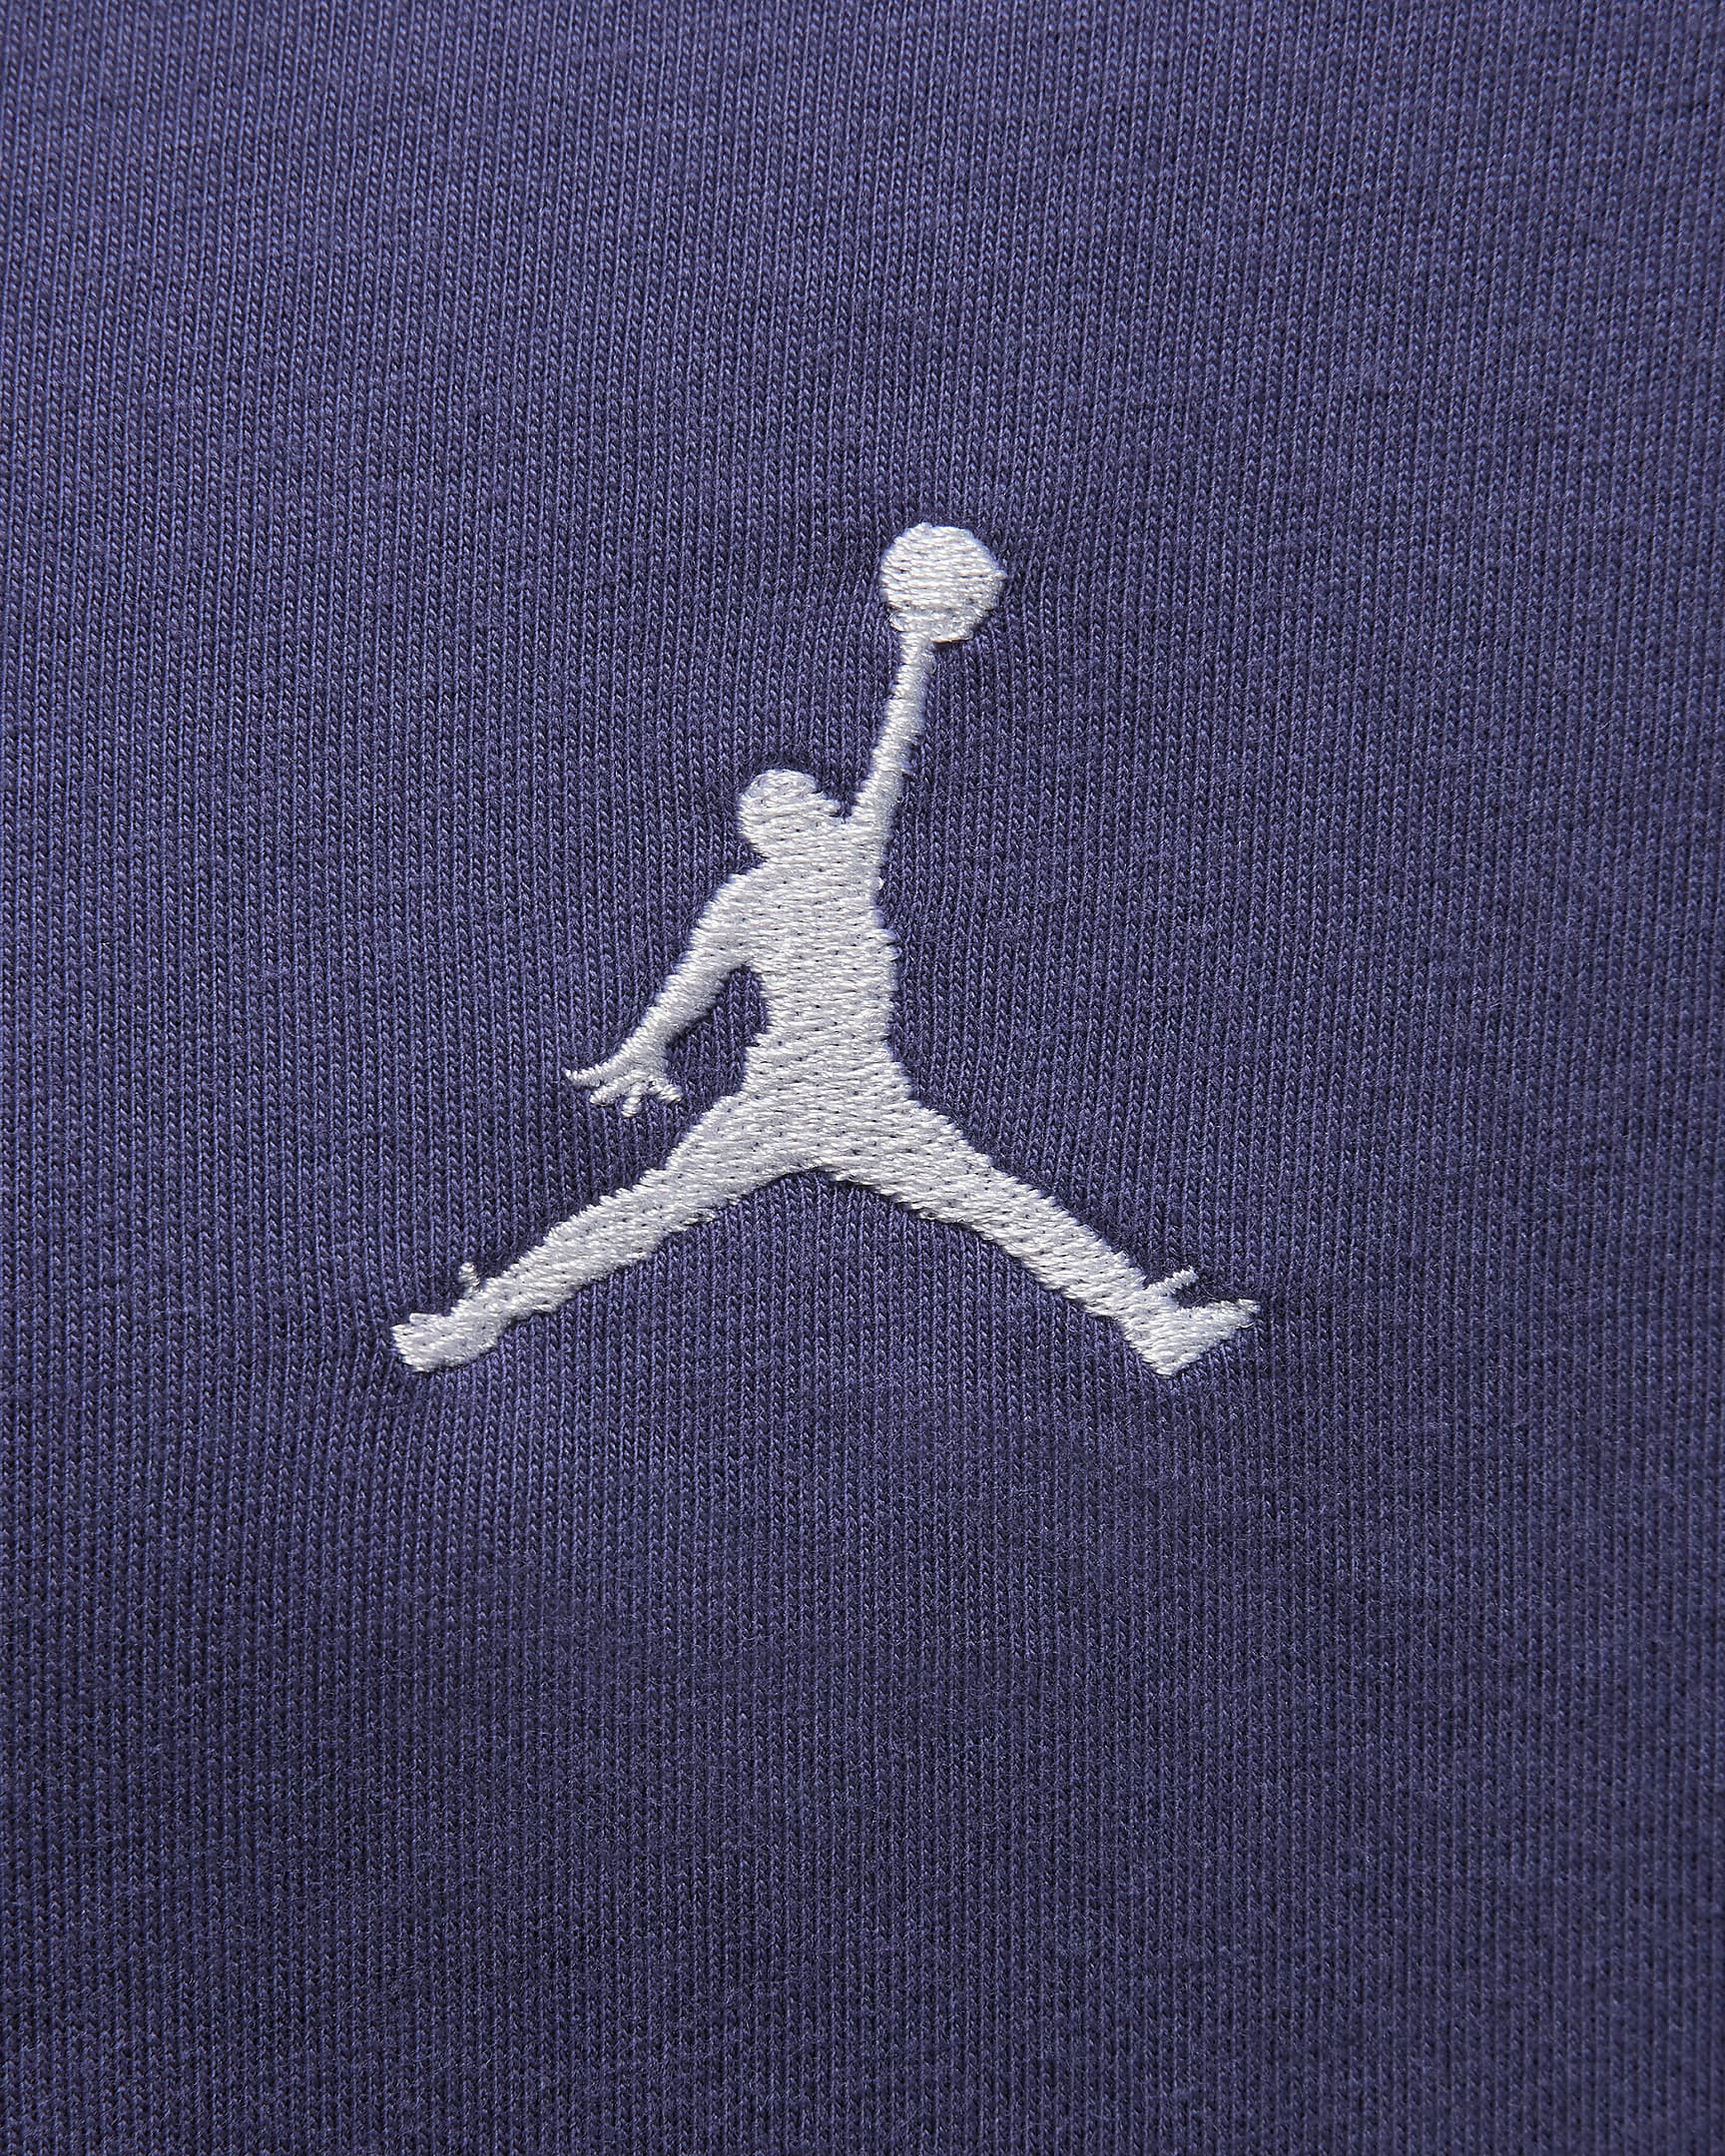 Jordan Flight Essentials Men's T-Shirt. Nike ZA